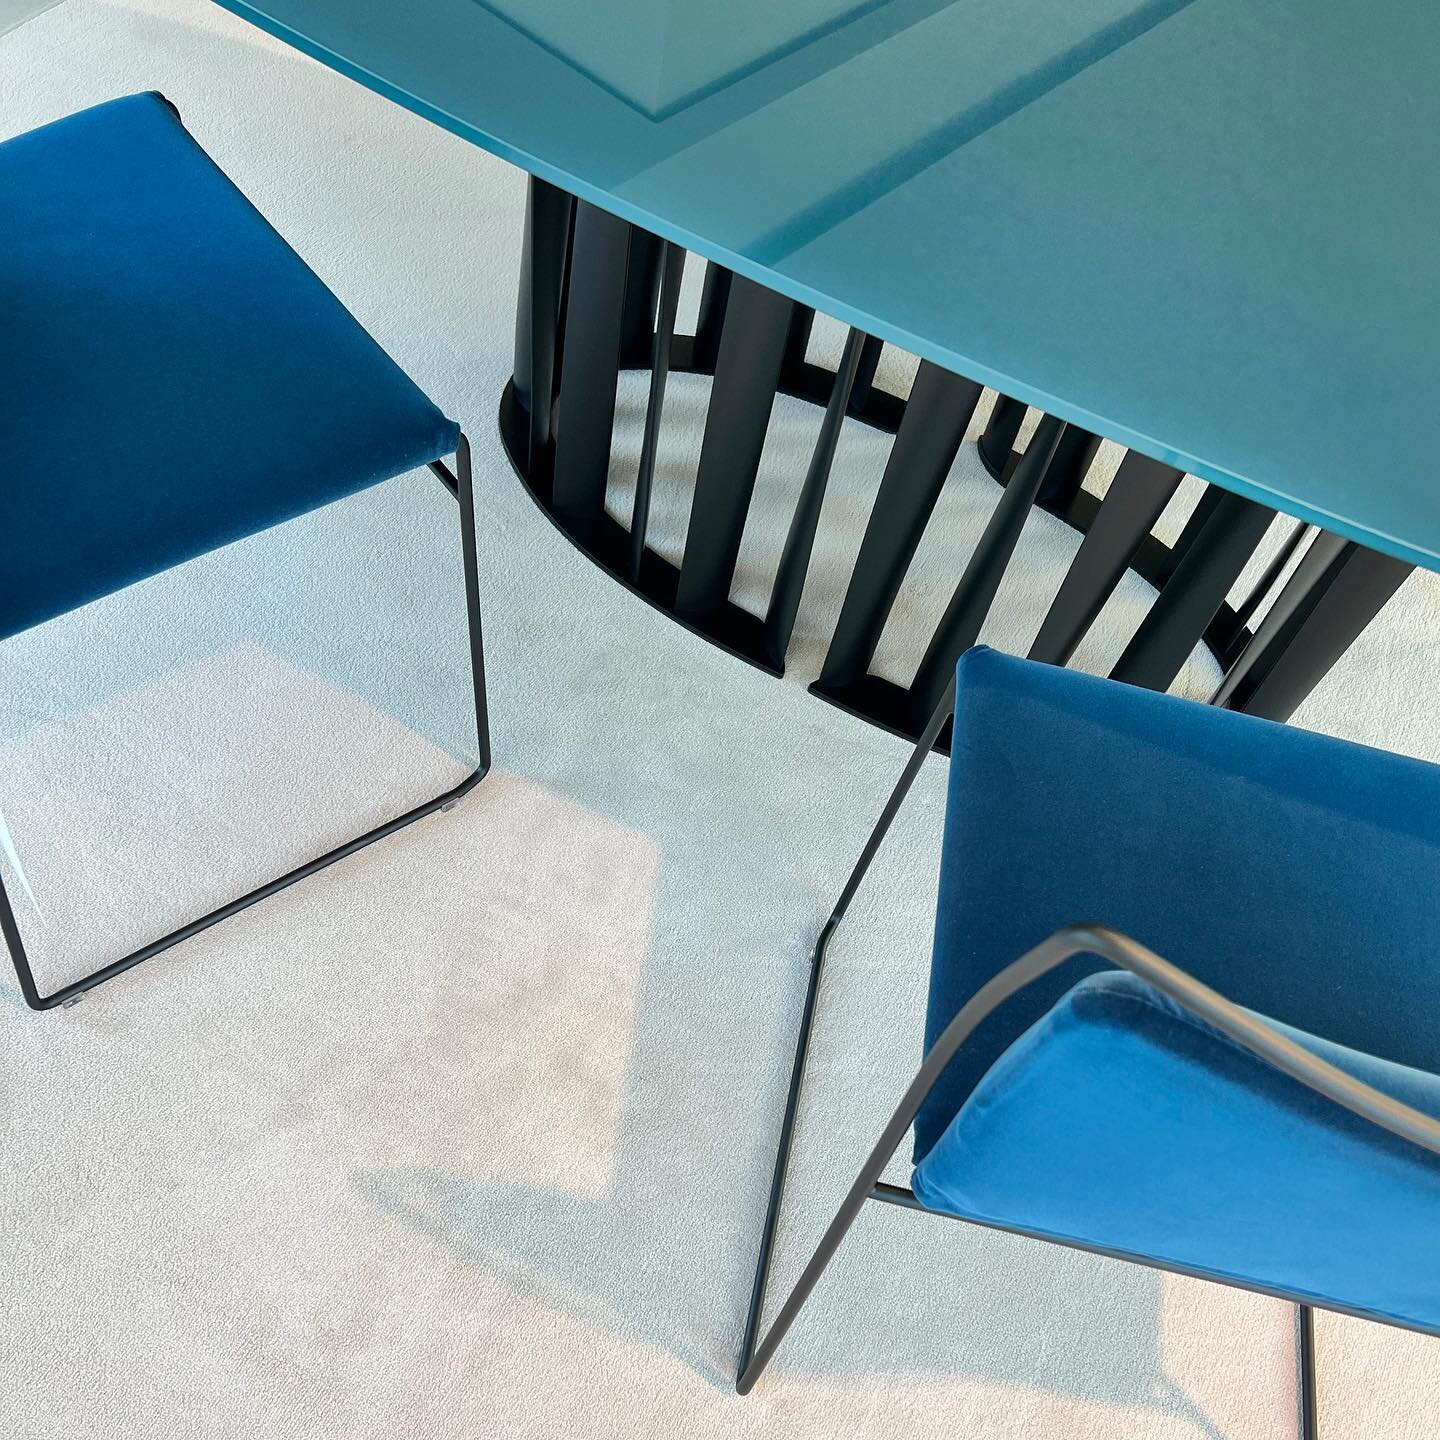 Tavolo Boboli 
Sedie Tulu

Cassina 
.
.
.
.
.
.
.
.
#cassinaofficial
#rodolfodordoni
#KazuhideTakahama
#showroom
#interiordesign
#forniture
#contemporarydesign
#moderndesign
#interiors
#design
#madeinitaly
#designinnovation
#designesterni 
#designisp